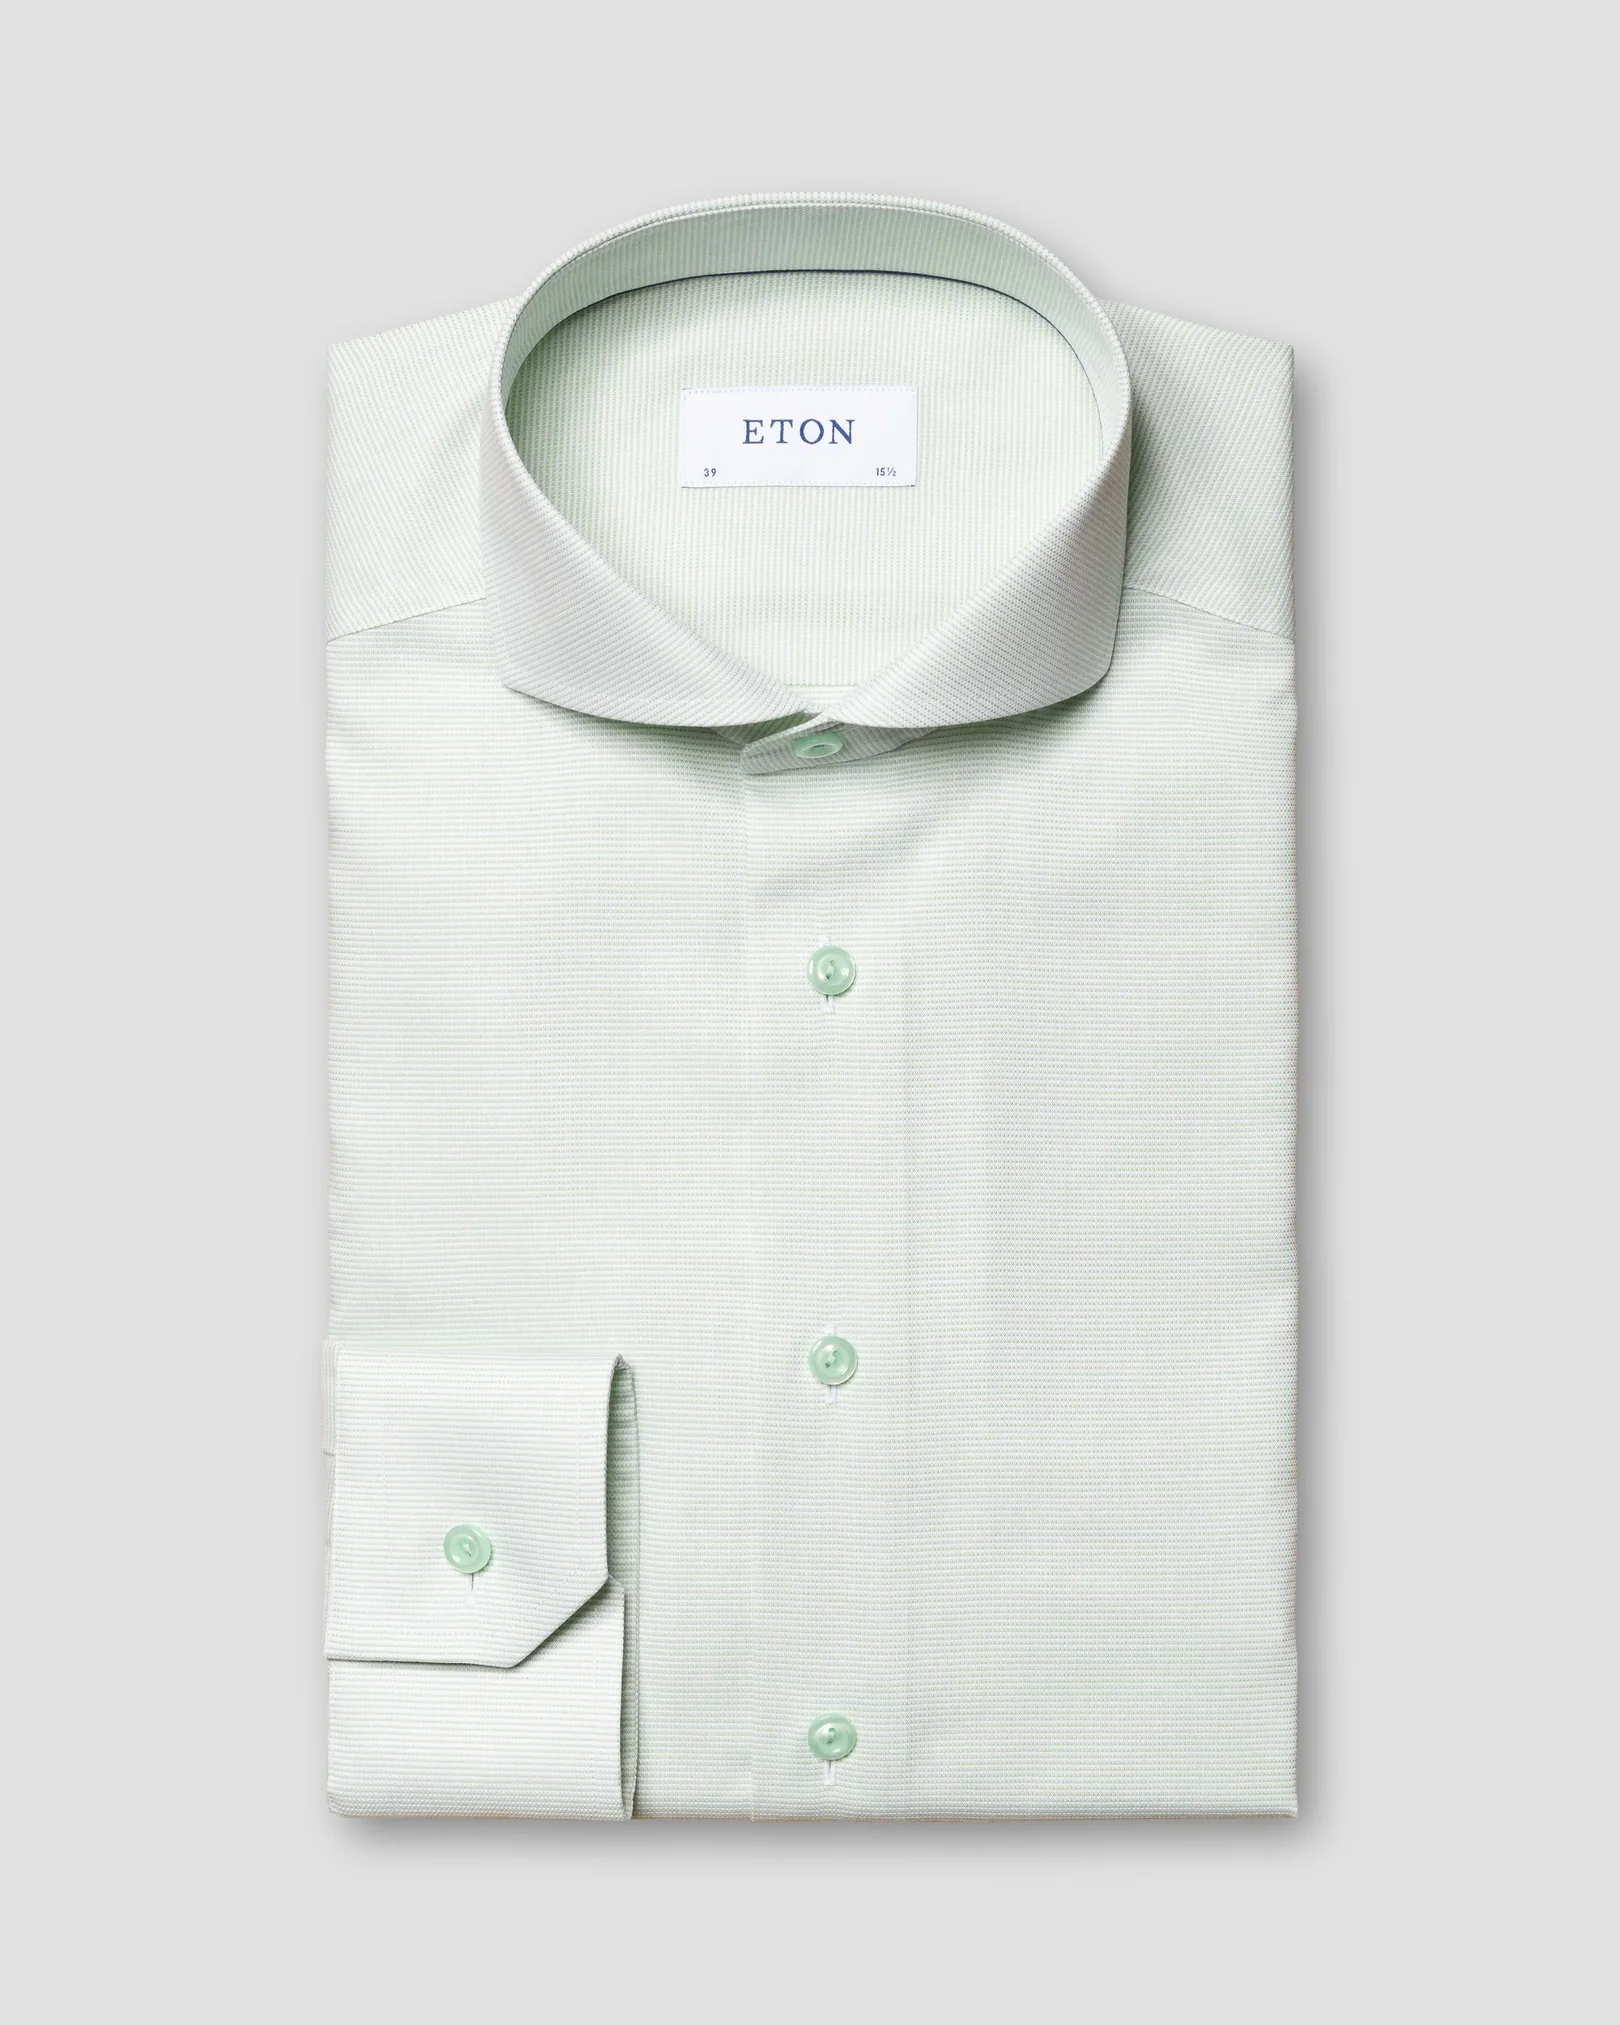 Eton - green twill shirt extreme cut away